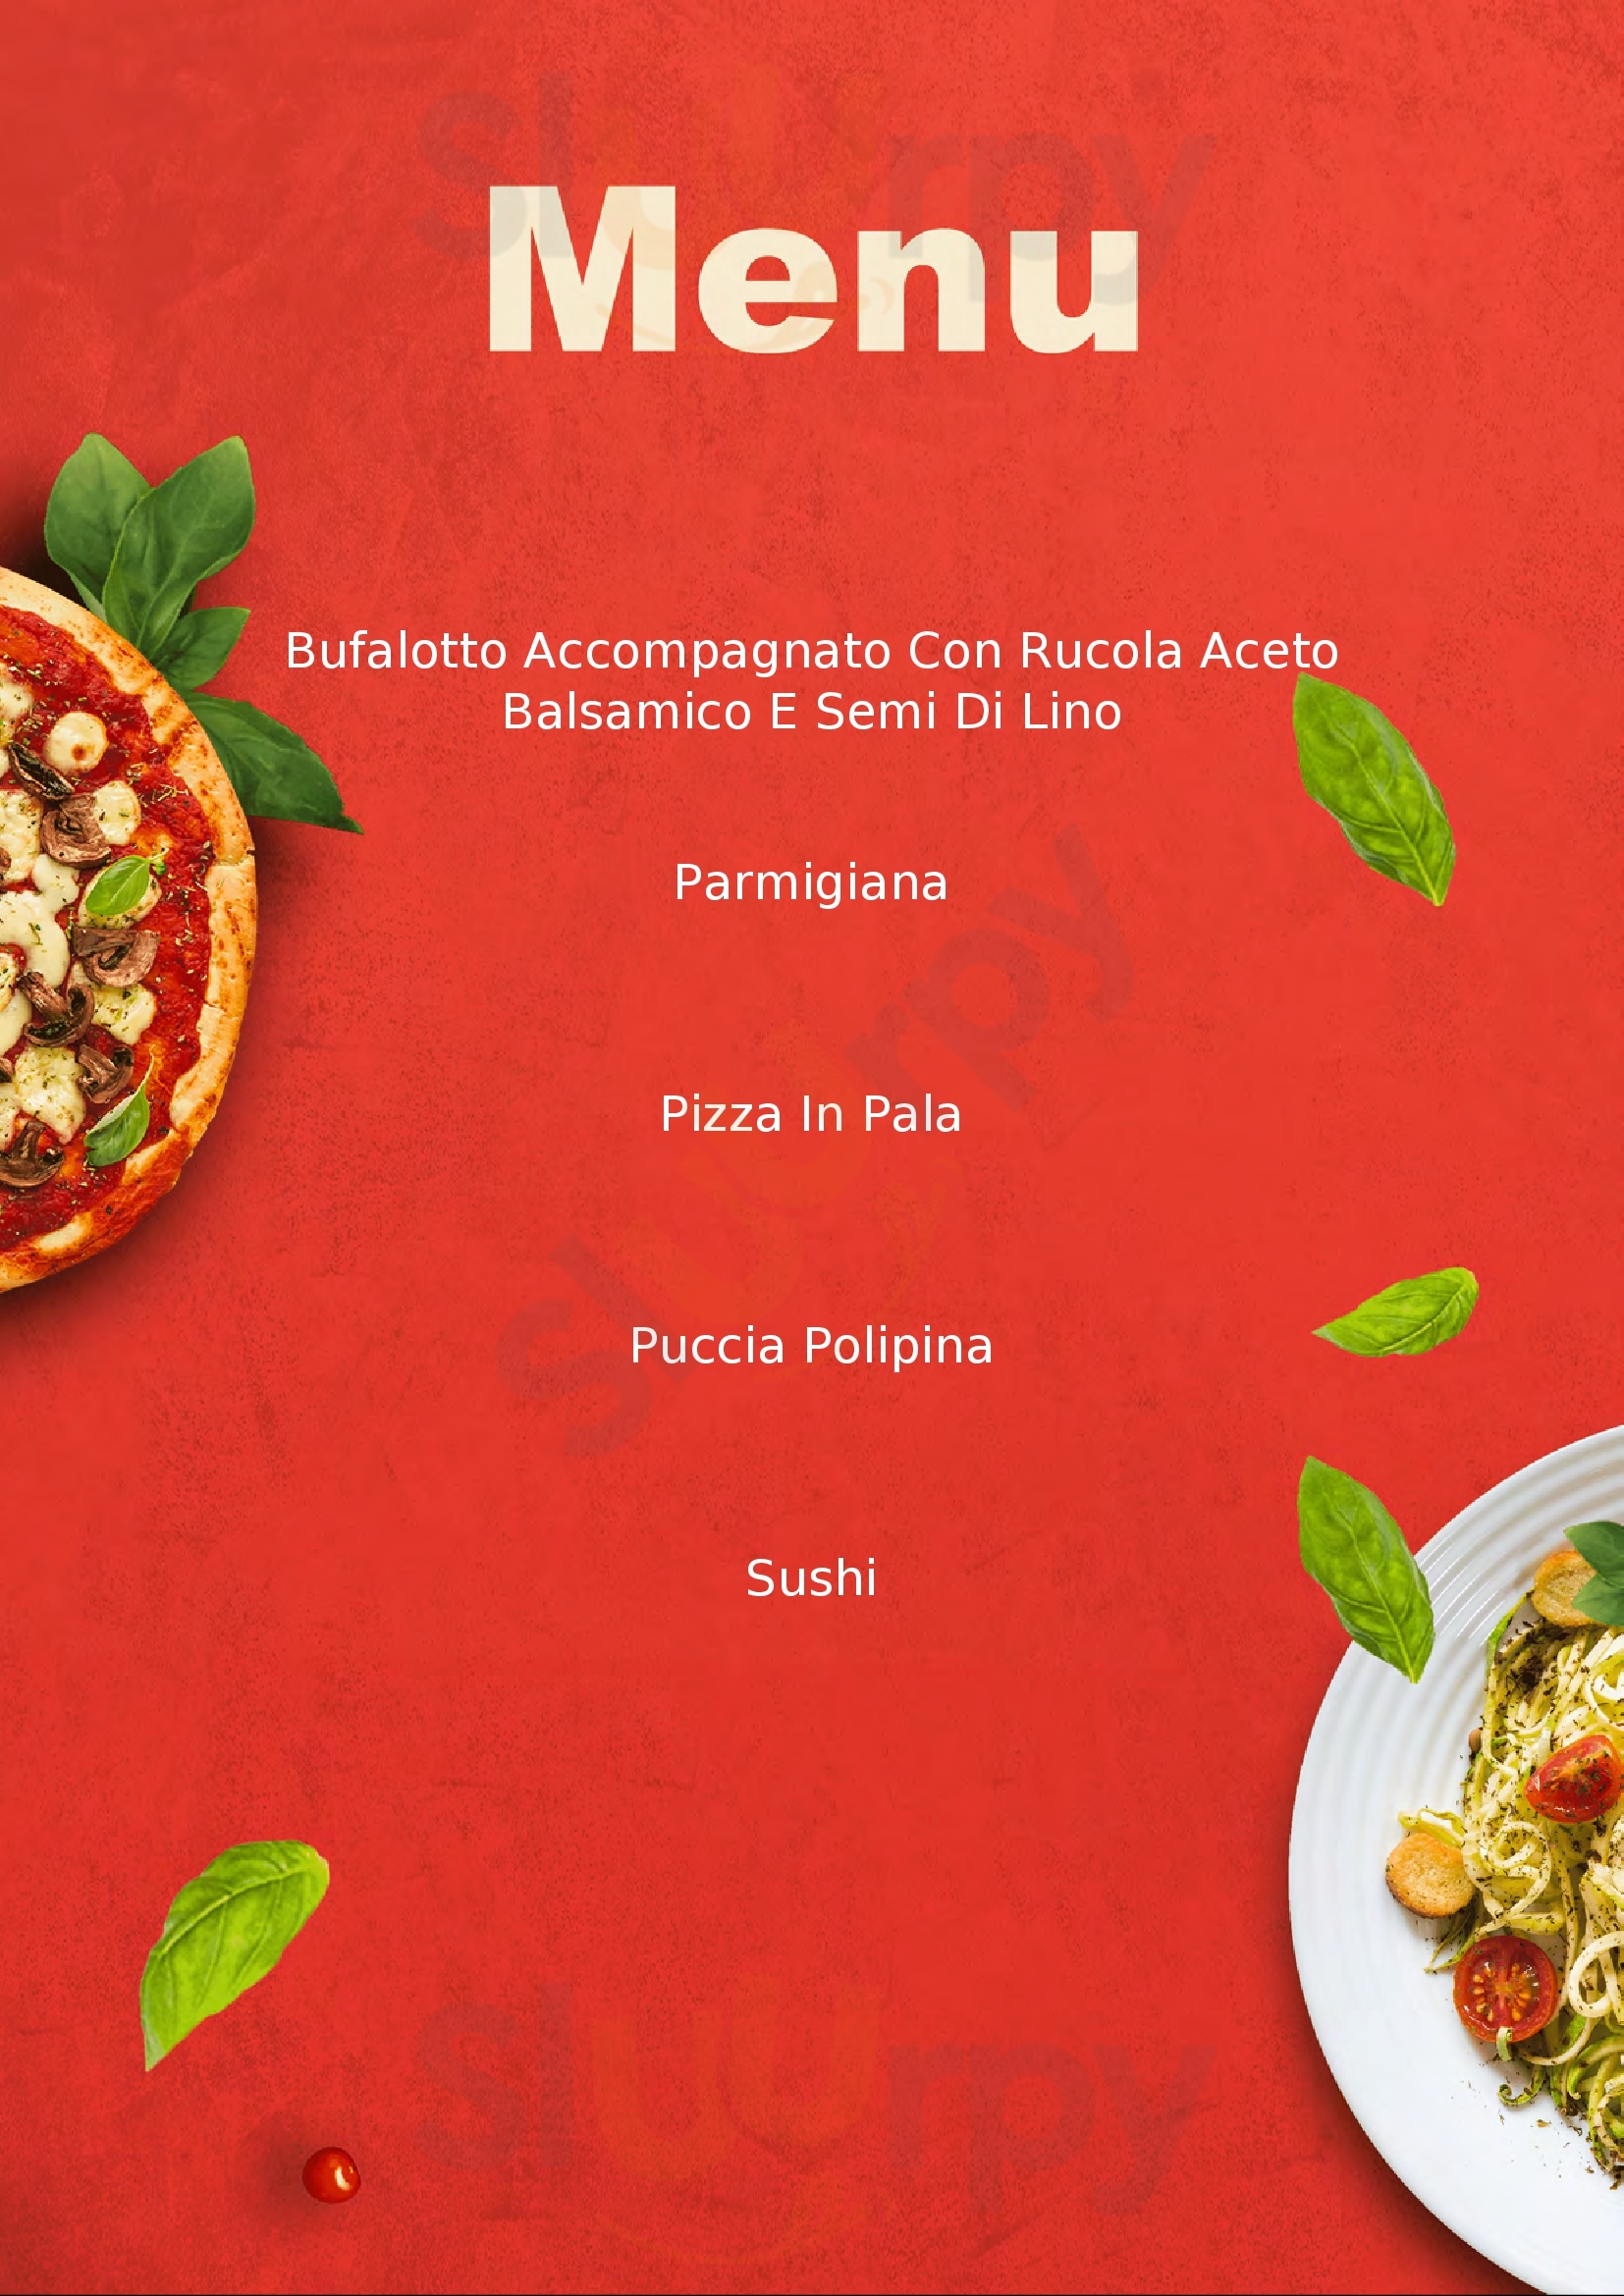 Da Costa Pizzeria Gioiosa Ionica menù 1 pagina